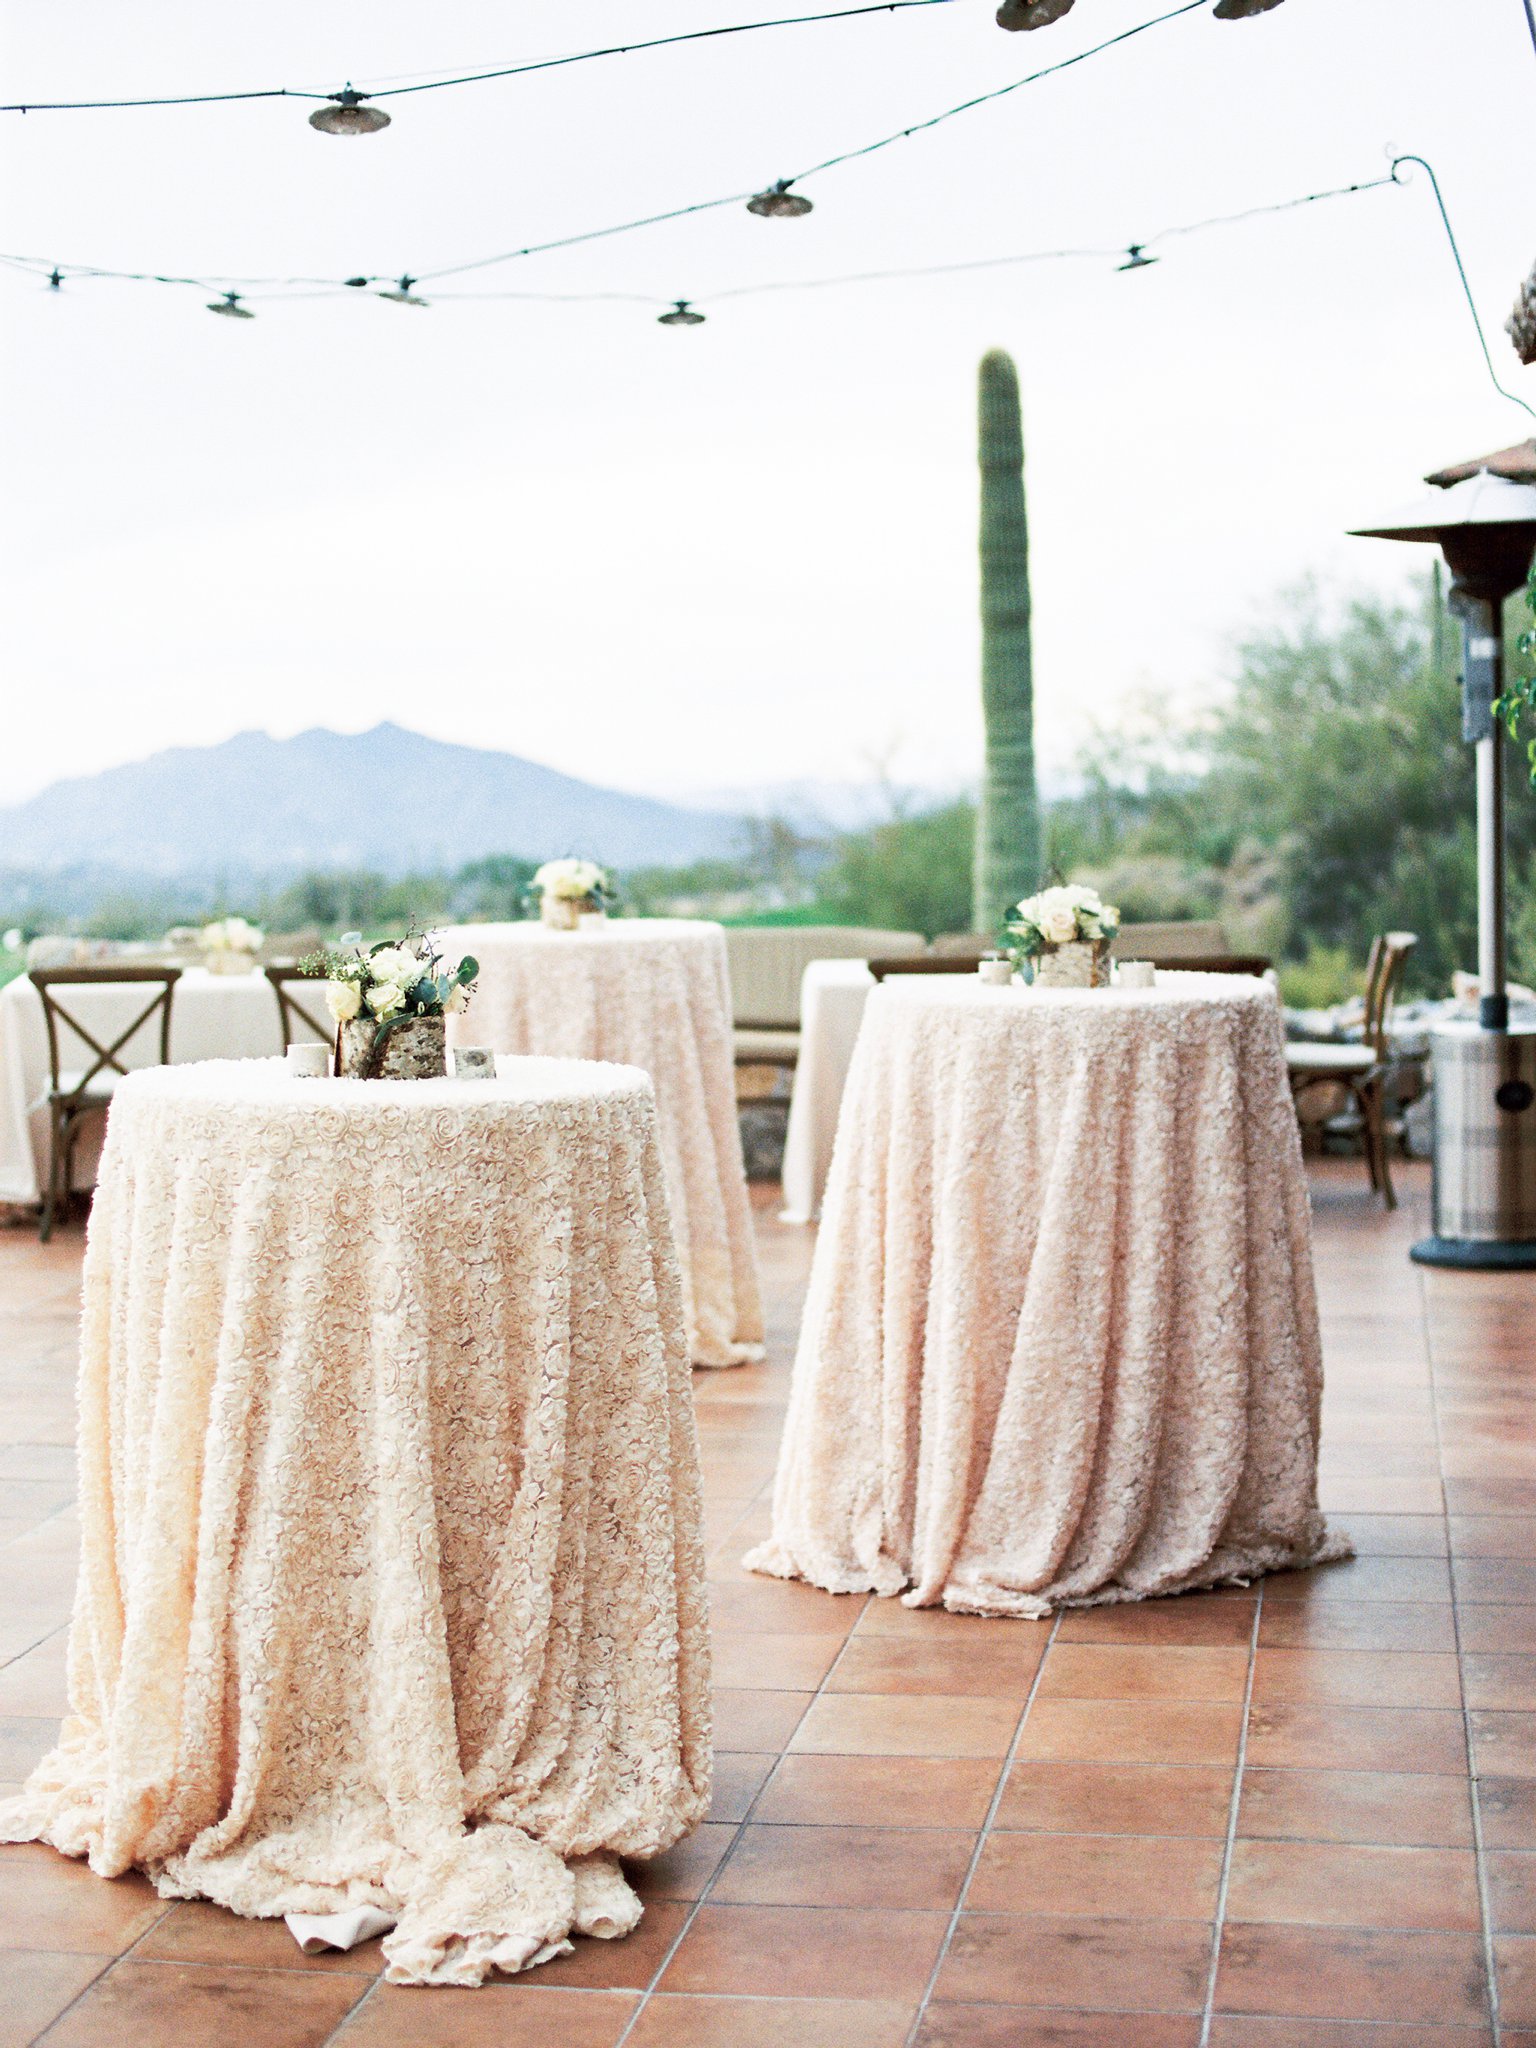 Desert Mountain wedding photos - Rachel Solomon Photography Blog - Phoenix Wedding Photographer